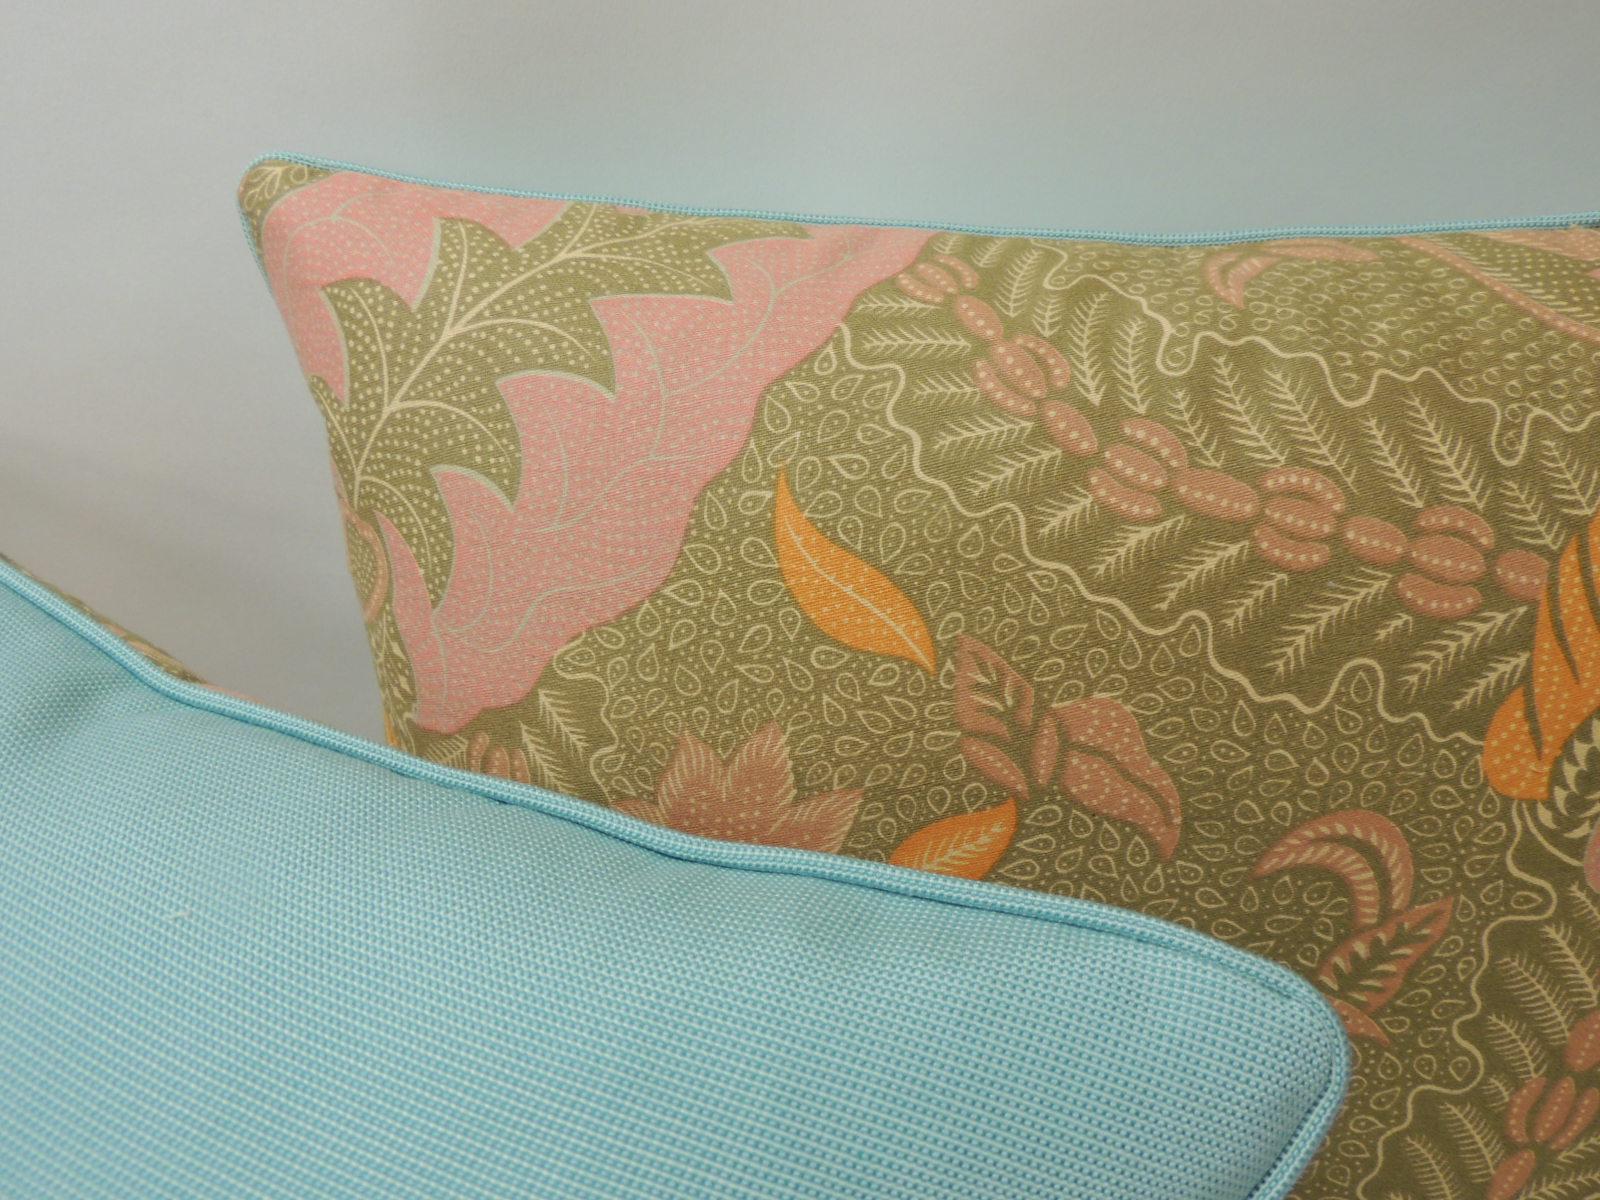 Indonesian Pair of Orange and Green Paisley Asian Batik Printed Decorative Pillows